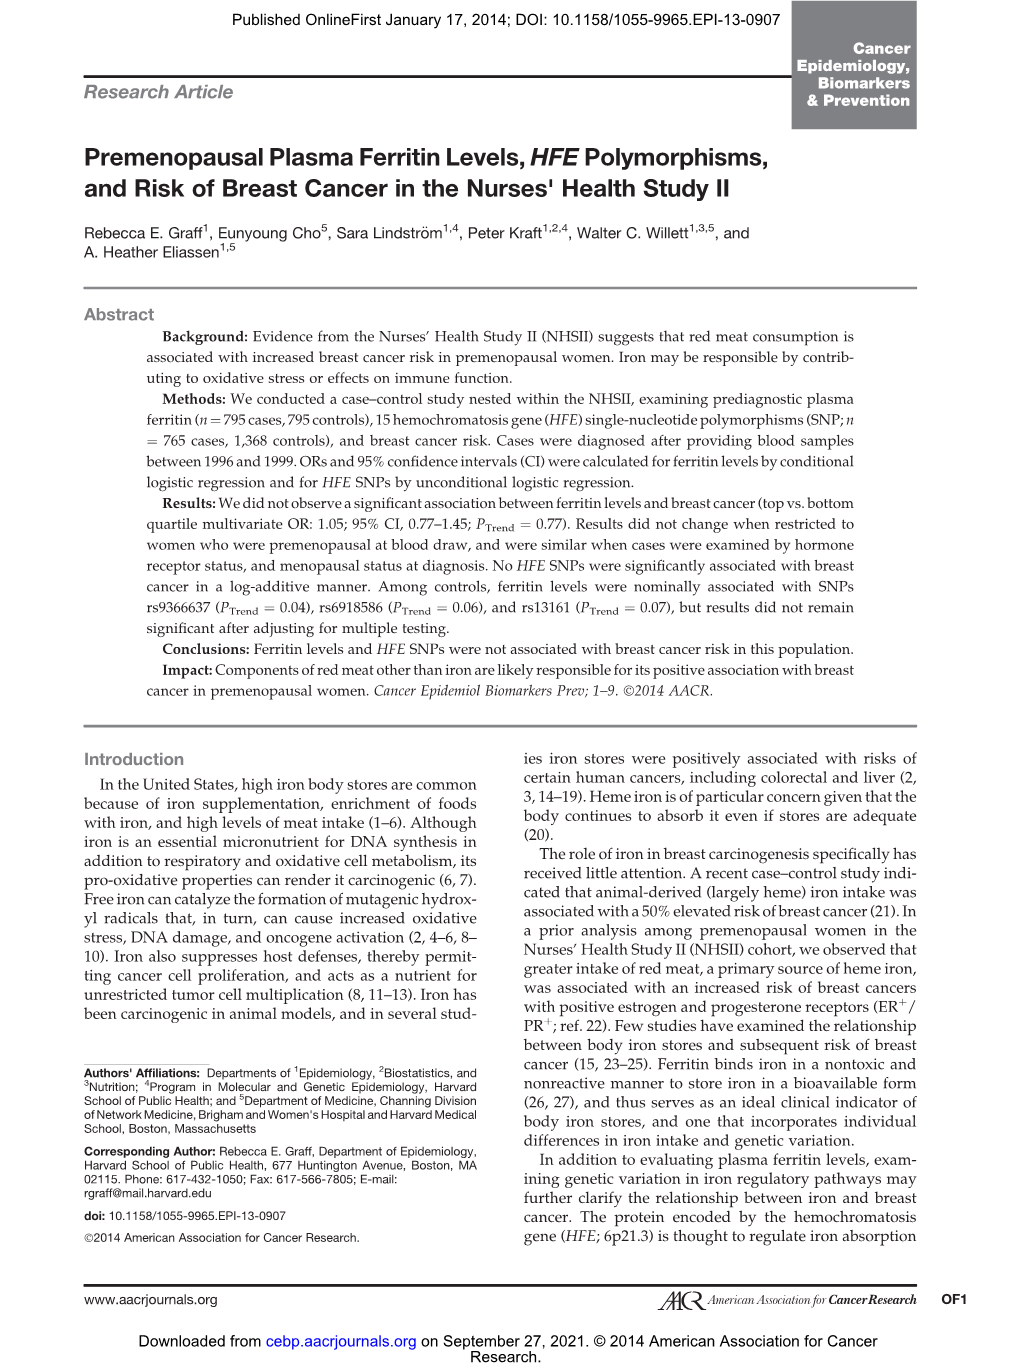 Premenopausal Plasma Ferritin Levels, HFE Polymorphisms, and Risk of Breast Cancer in the Nurses' Health Study II